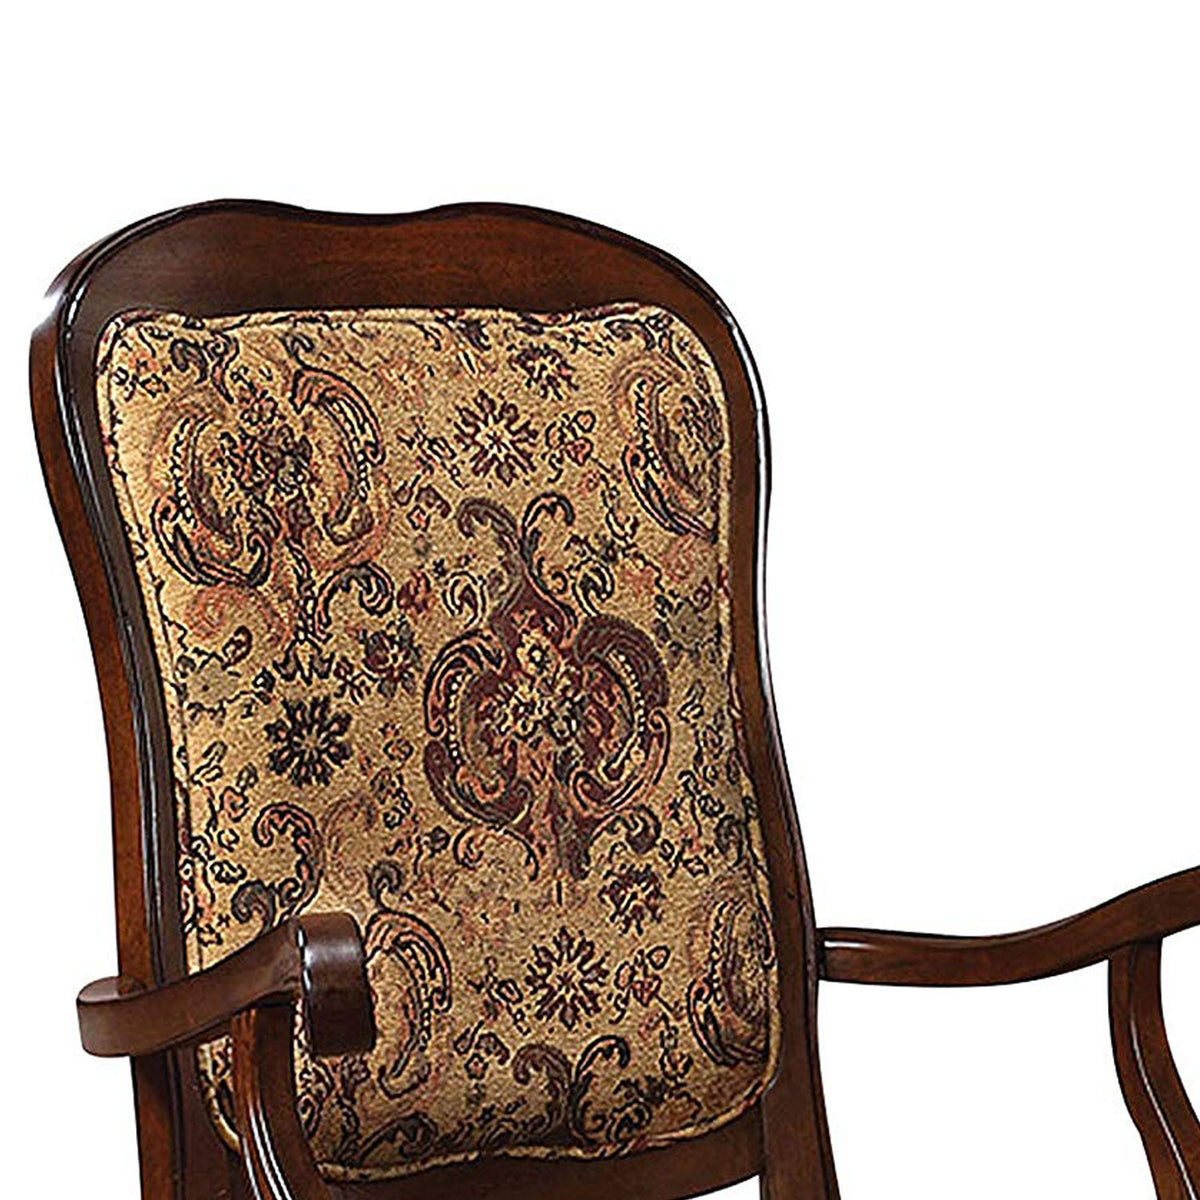 Sharan Rocking Chair, Cherry Brown - BM151942